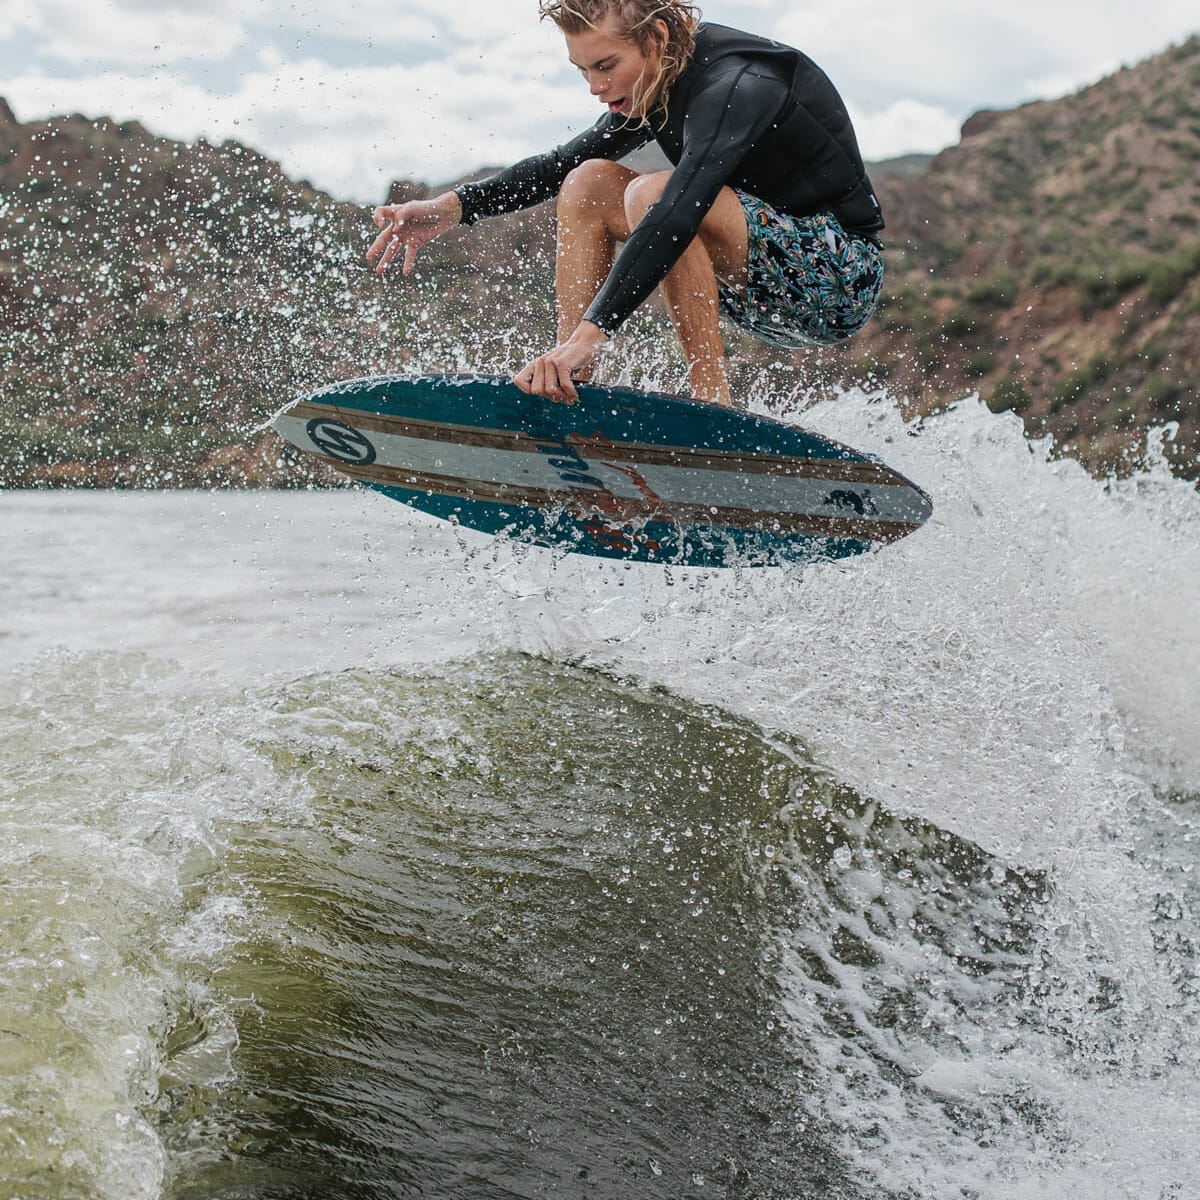 A man rides a wakesurf board.